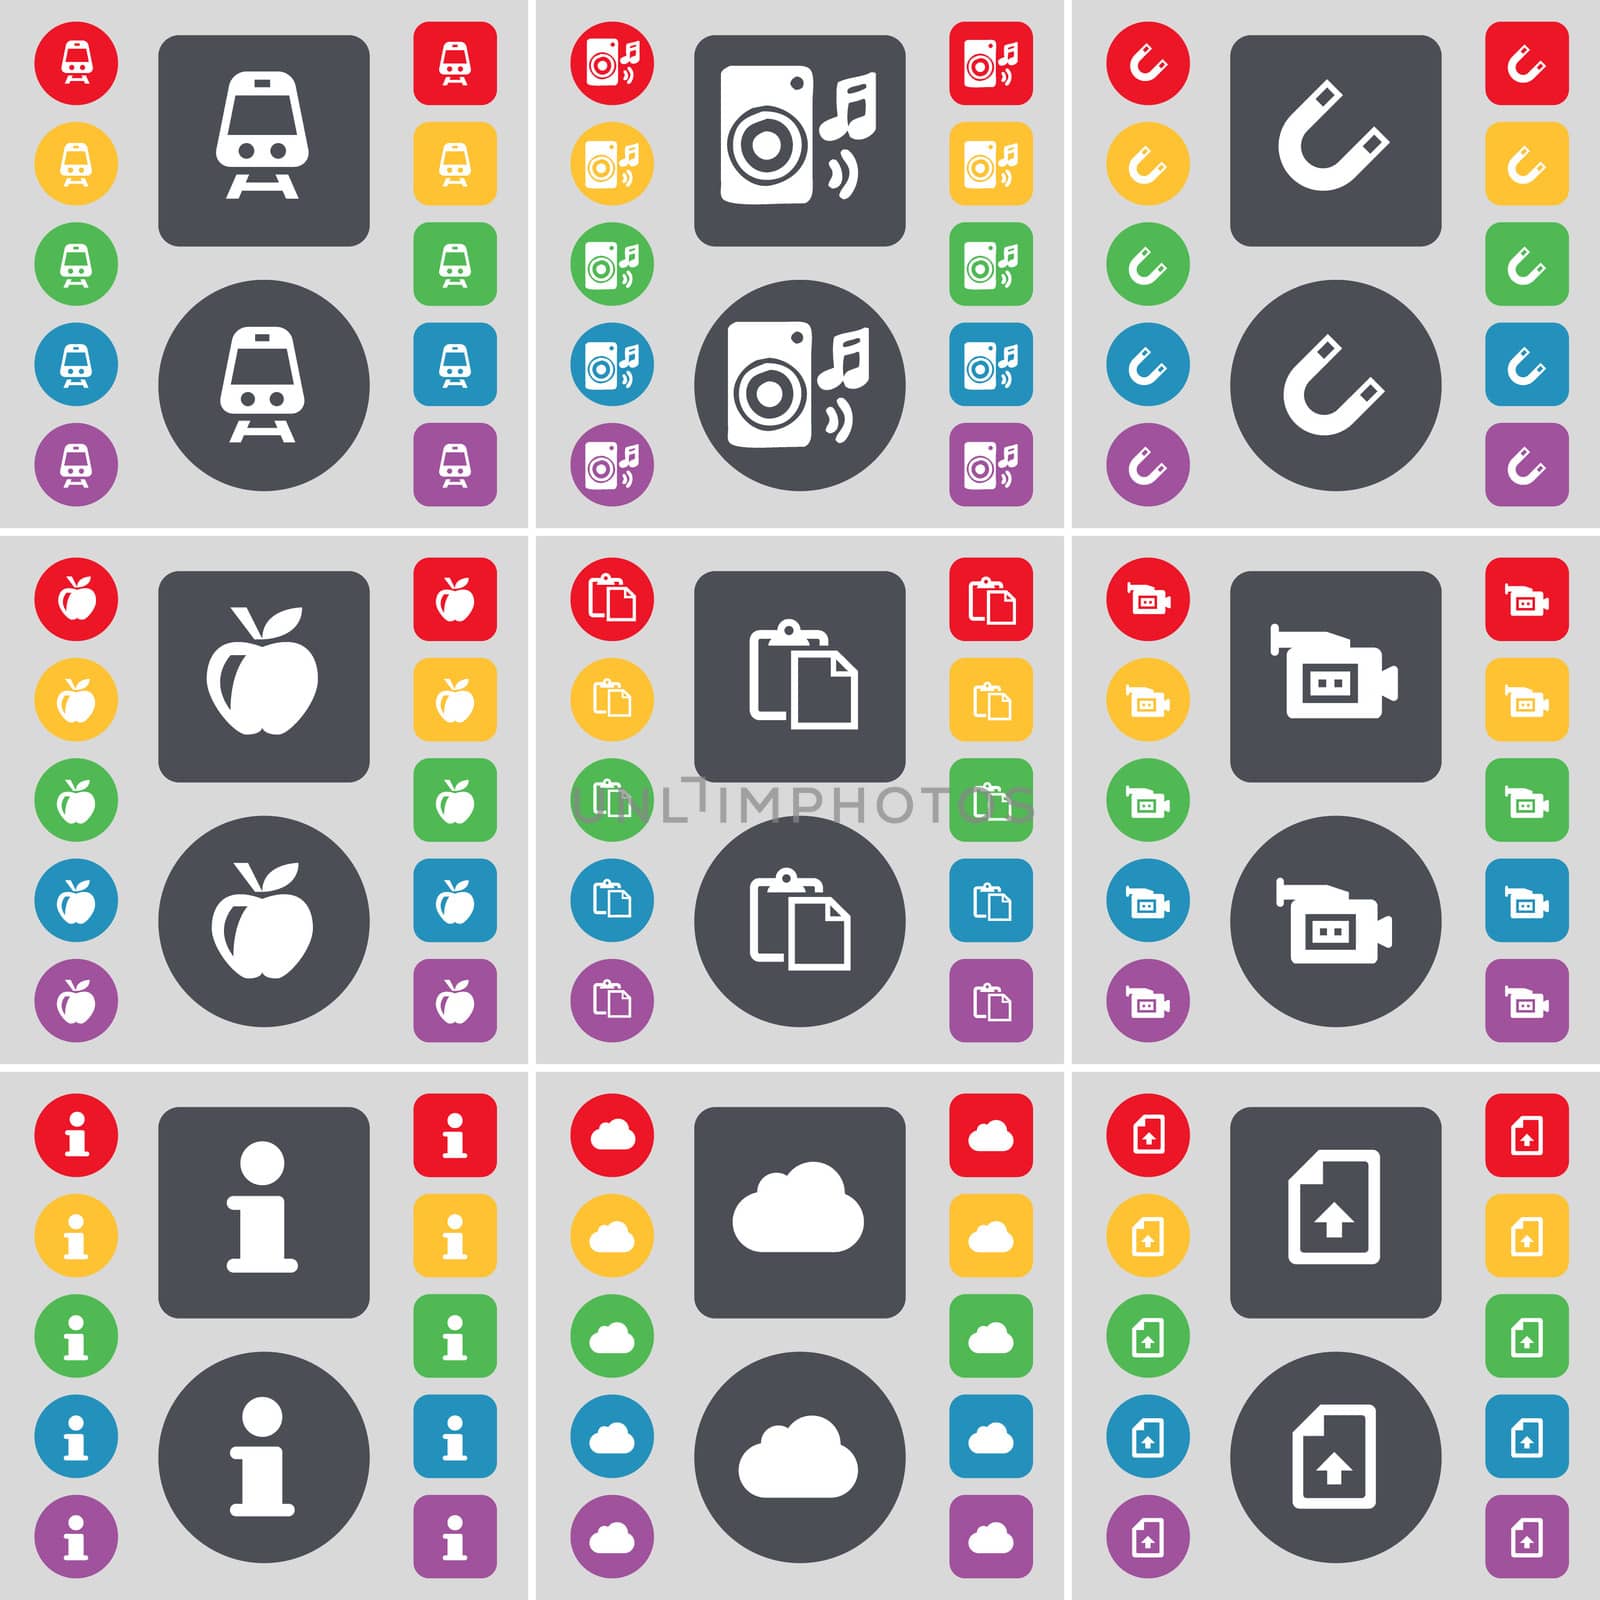 Train, Speaker, Magnet, Apple, Survey, Film camera, Information, Cloud, Upload file icon symbol. A large set of flat, colored buttons for your design. illustration